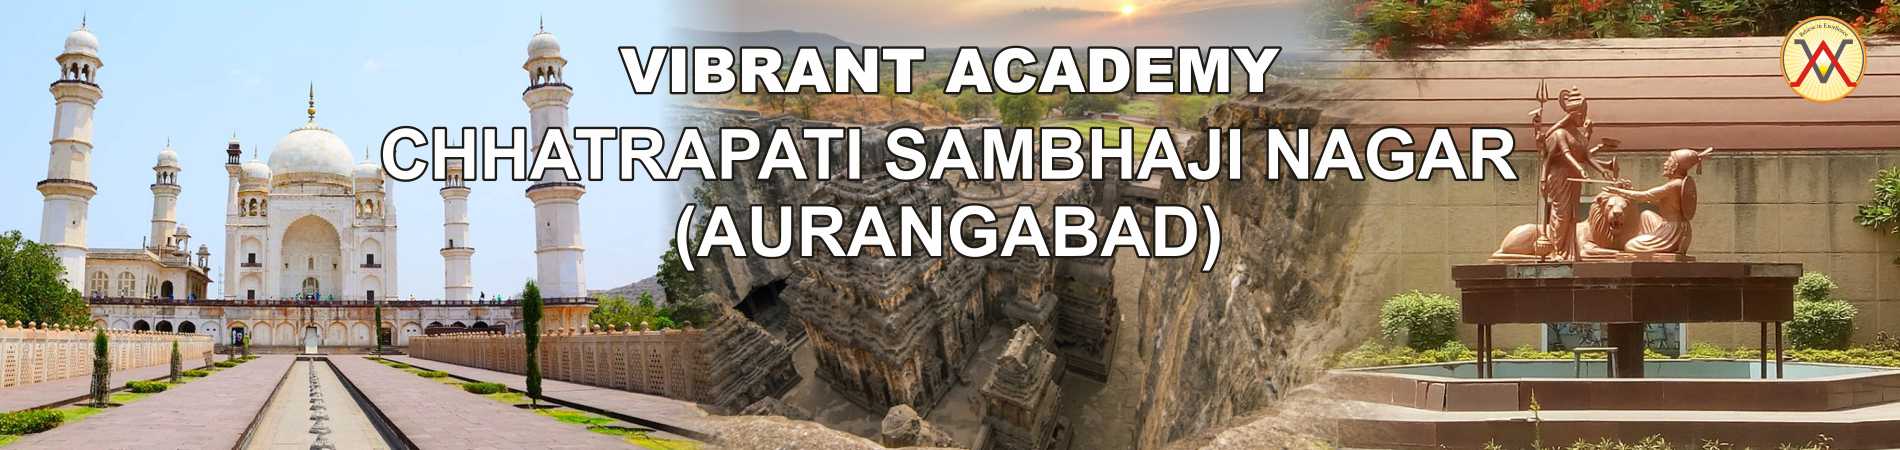 Vibrant Academy Aurangabad